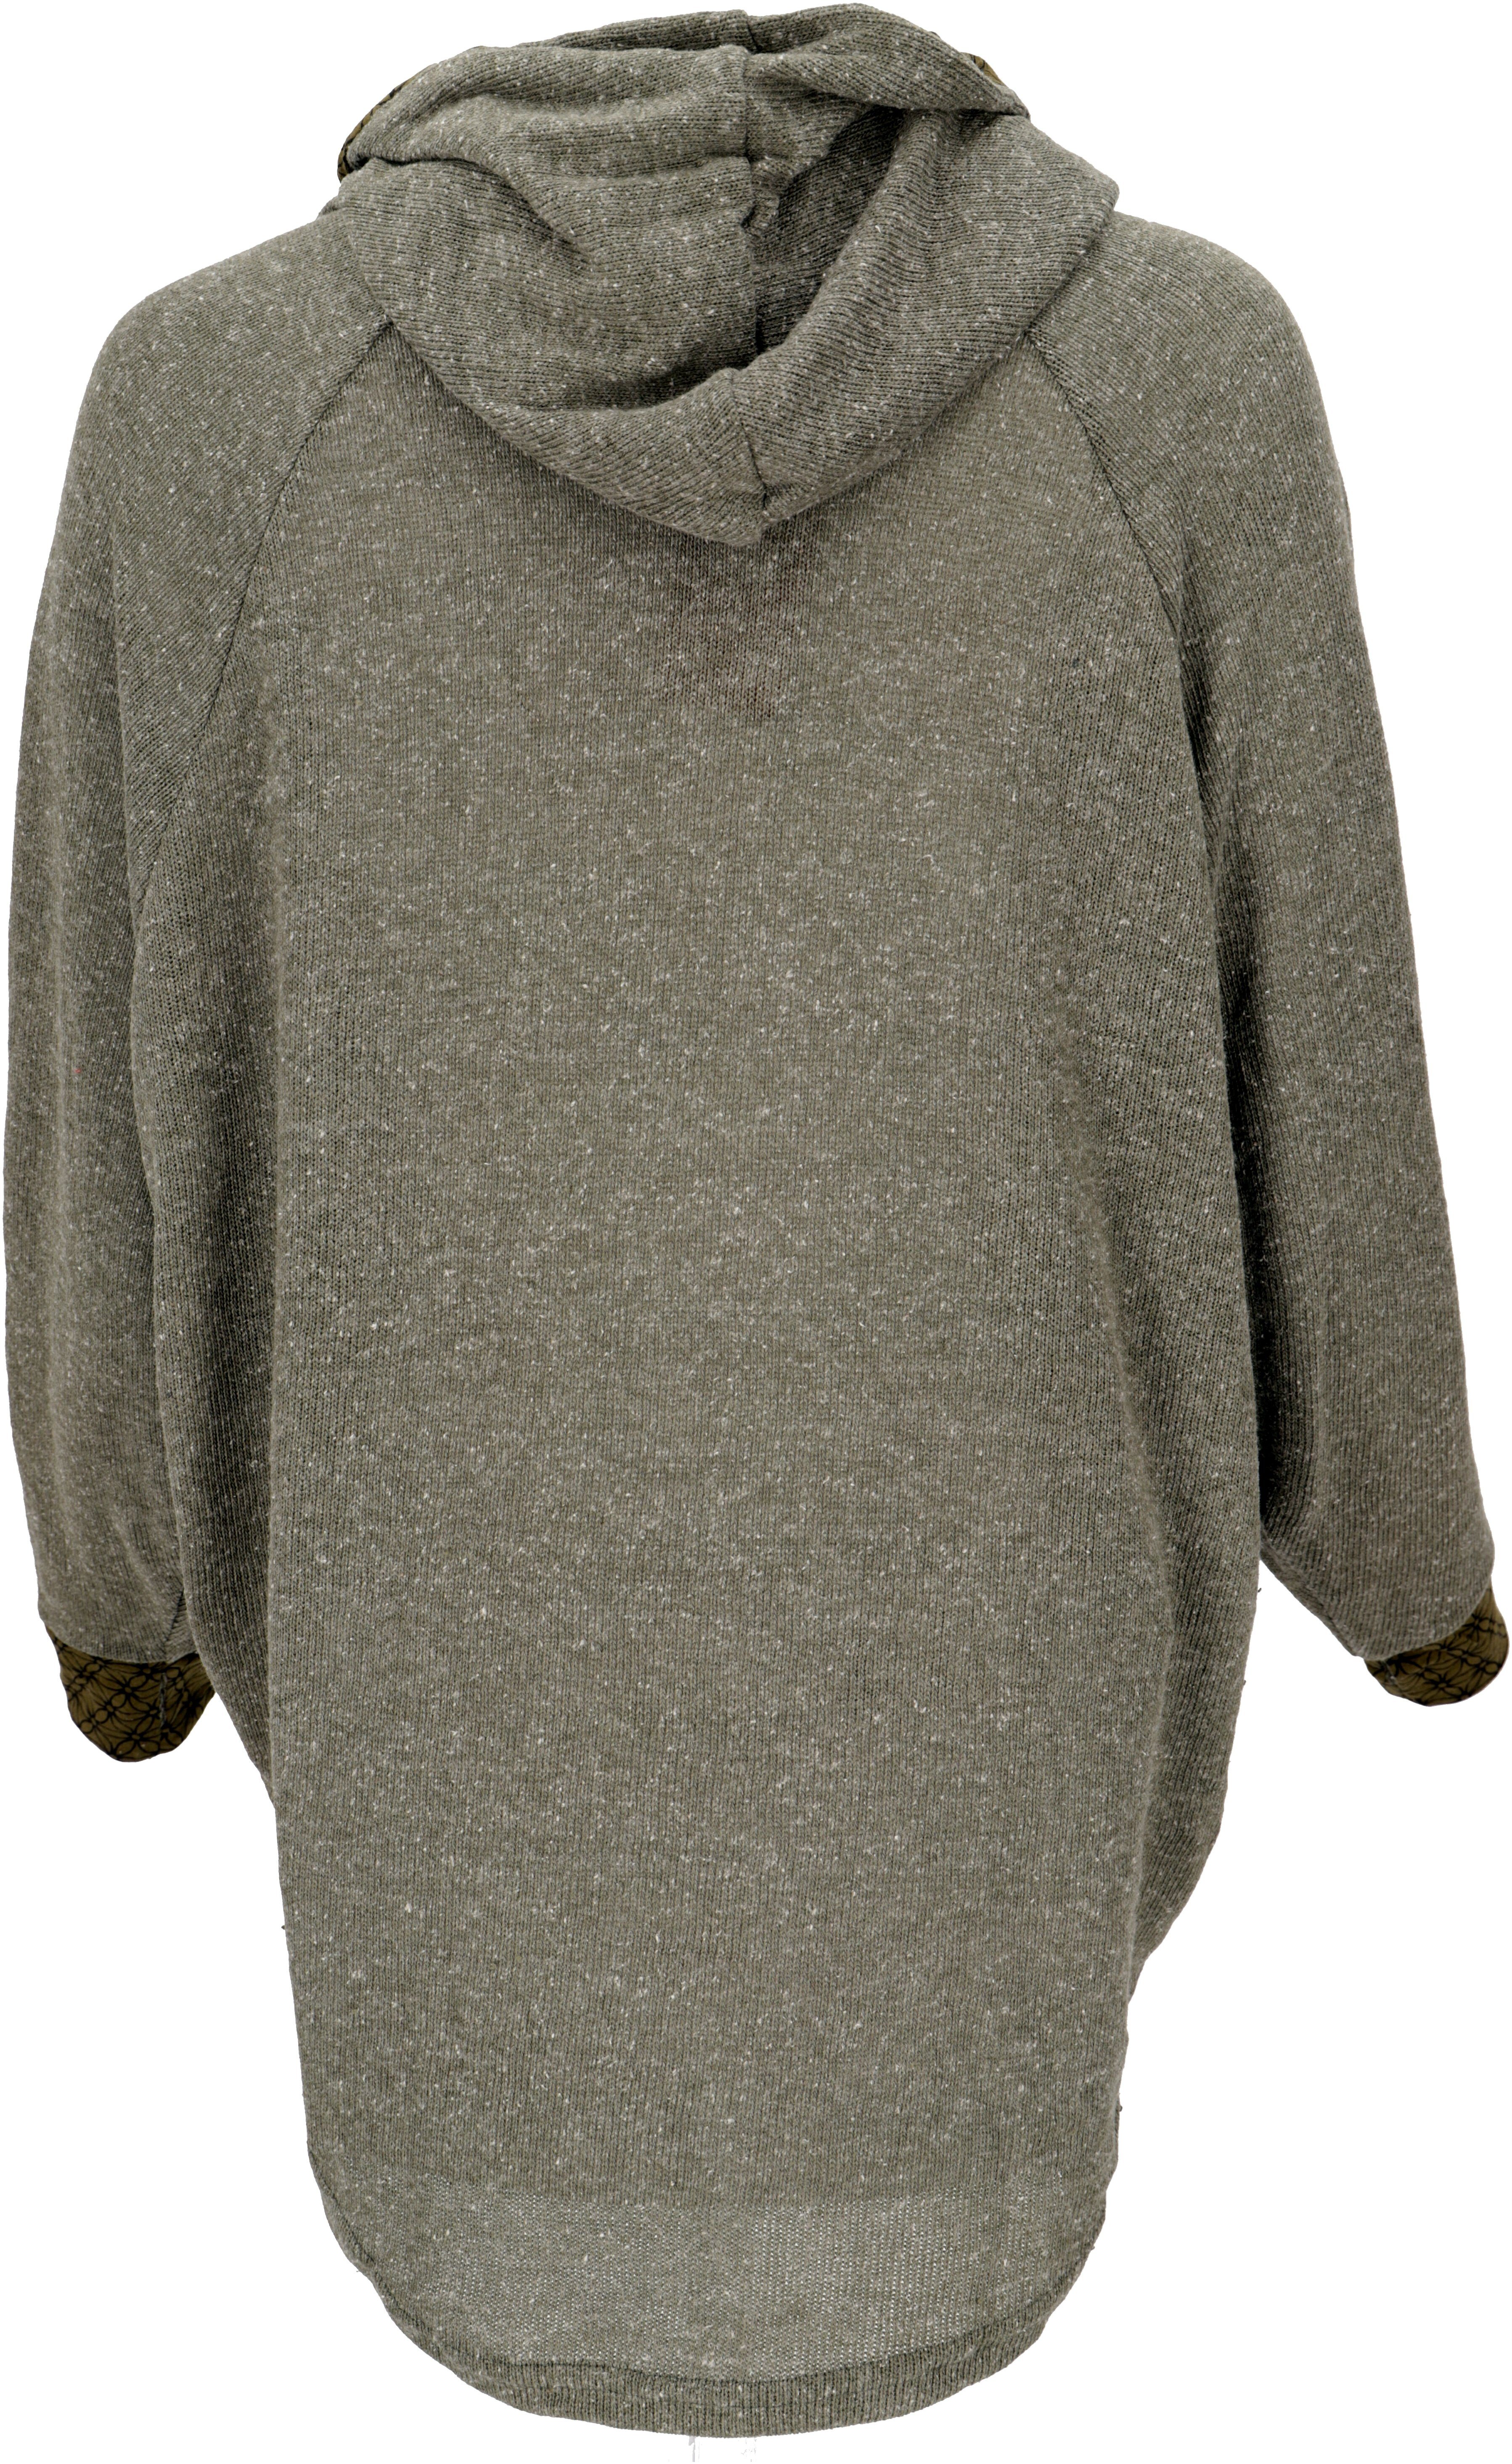 Guru-Shop Longsleeve Hoody, Sweatshirt, Pullover, alternative Kapuzenpullover -.. Bekleidung khakigrün